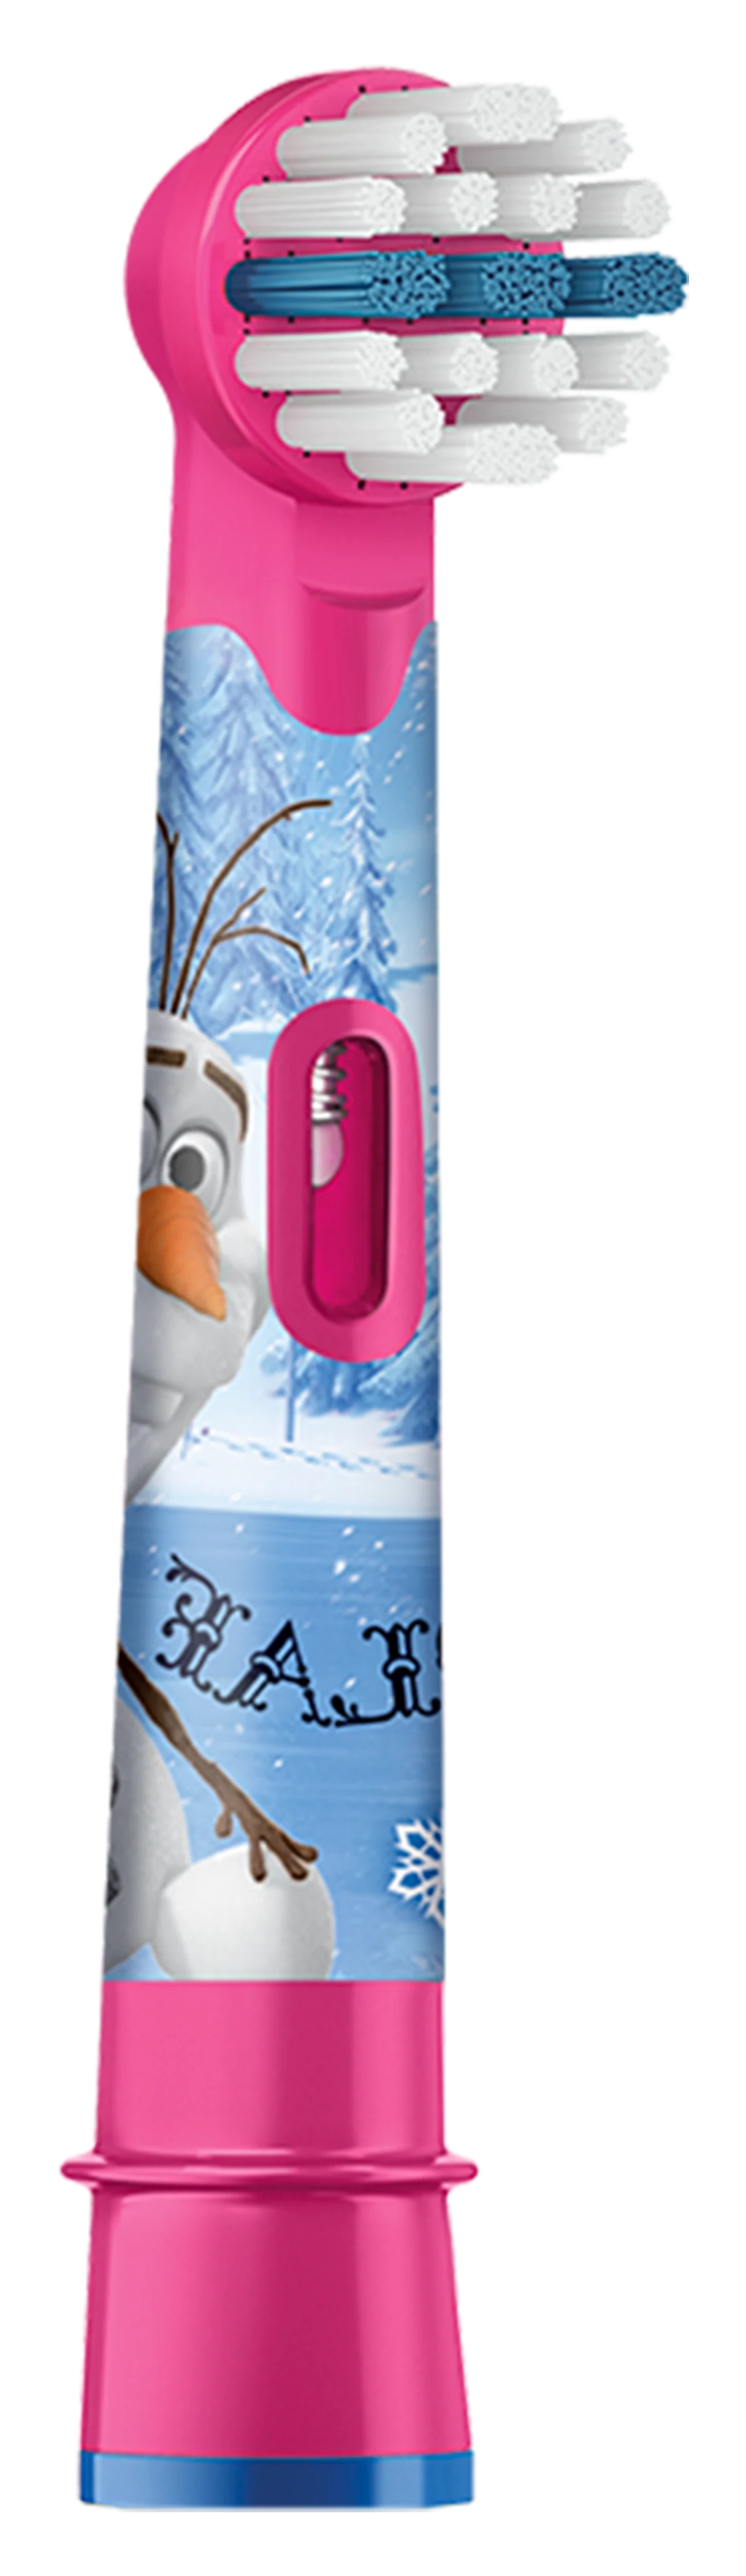 Cabeça para escova de dentes elétrica Oral-B Stages Frozen 